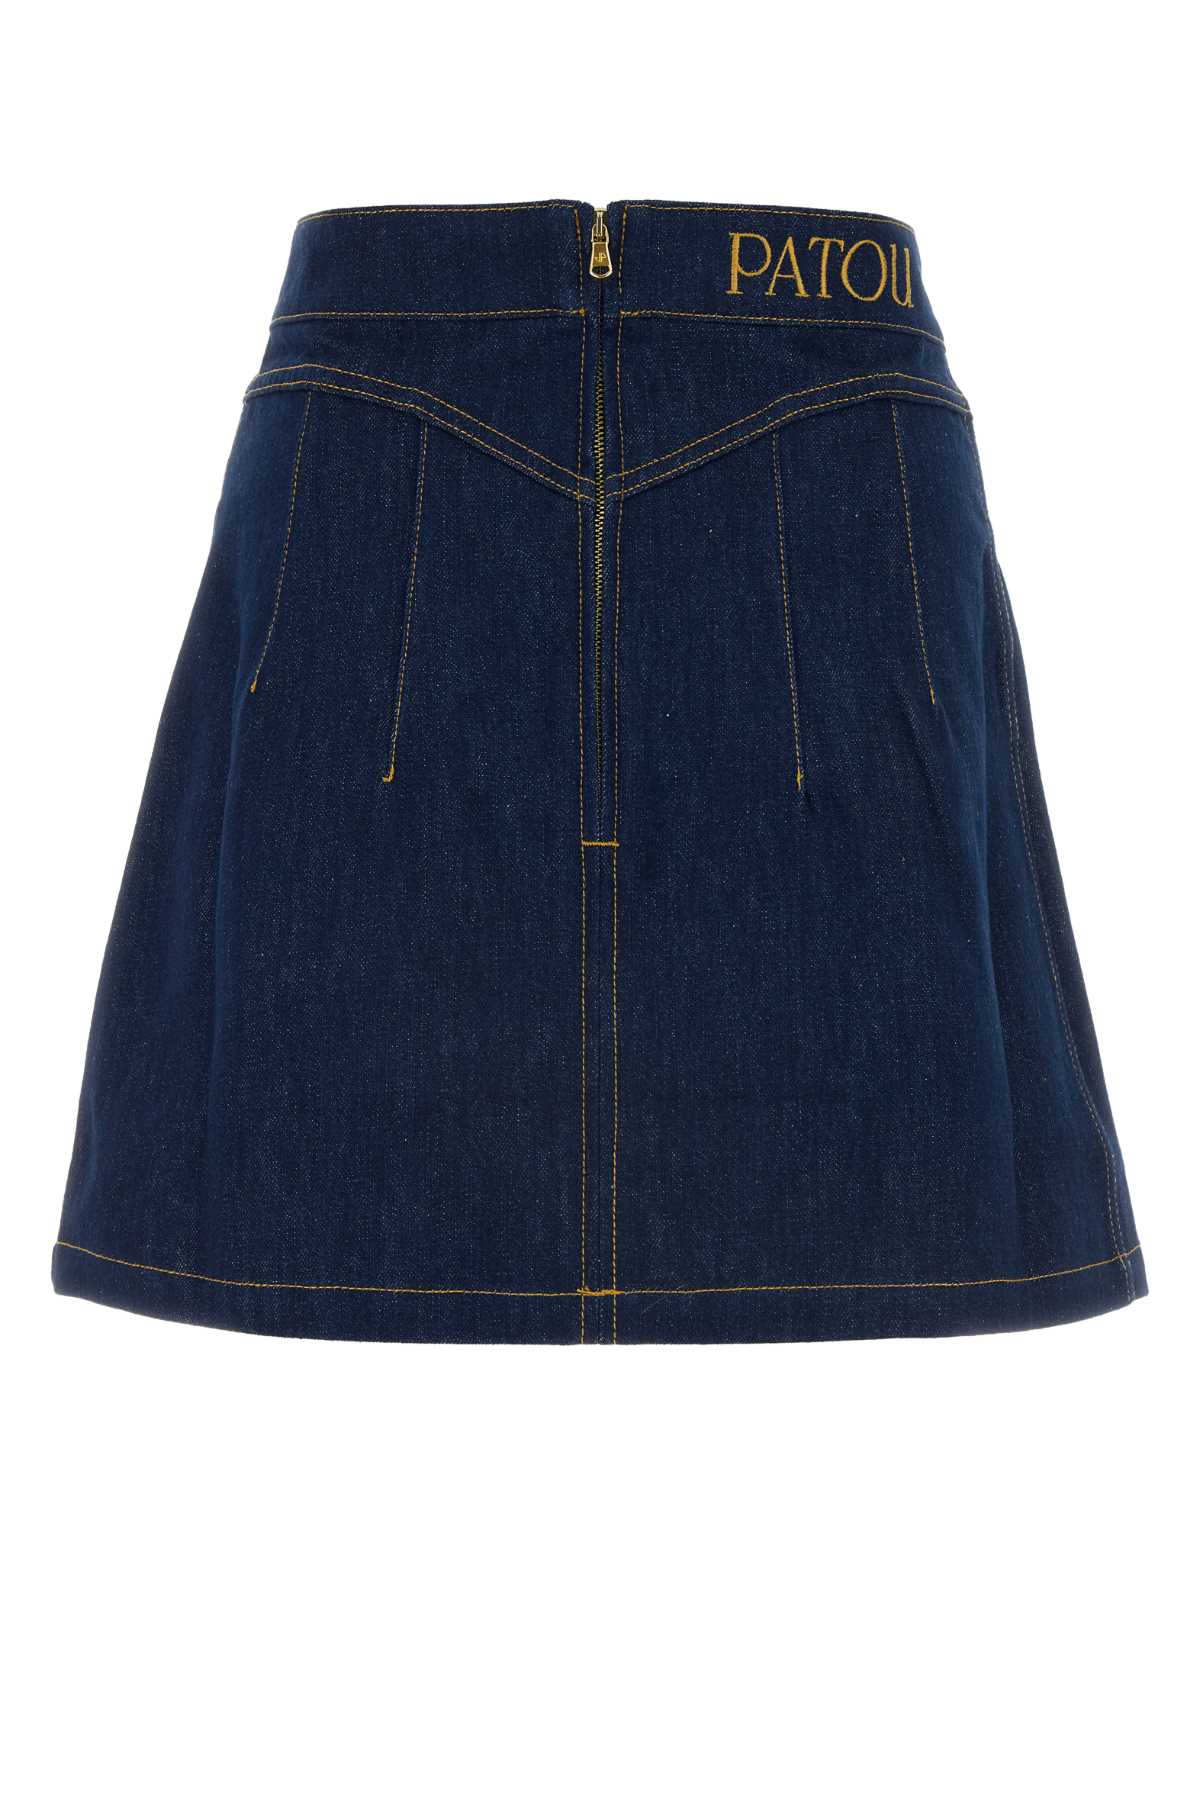 Patou Denim Skirt In Rodeoblue